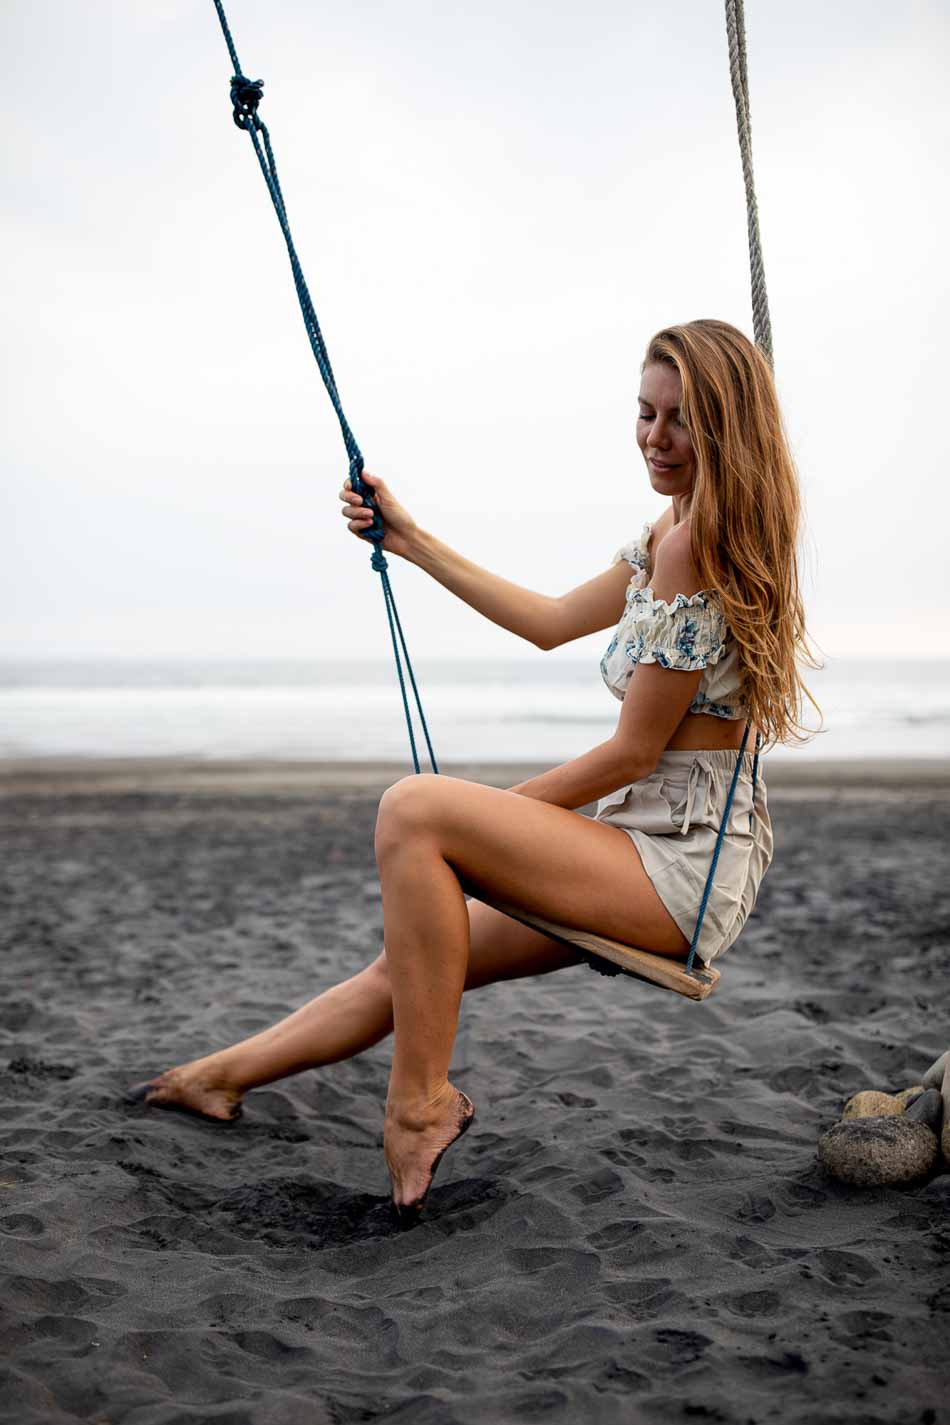 Ukrainian Model @alexa_air sits on a swing on a black sand beach | Swimwear | Lifestyle Photography | Canggu, Bali, Indonesia